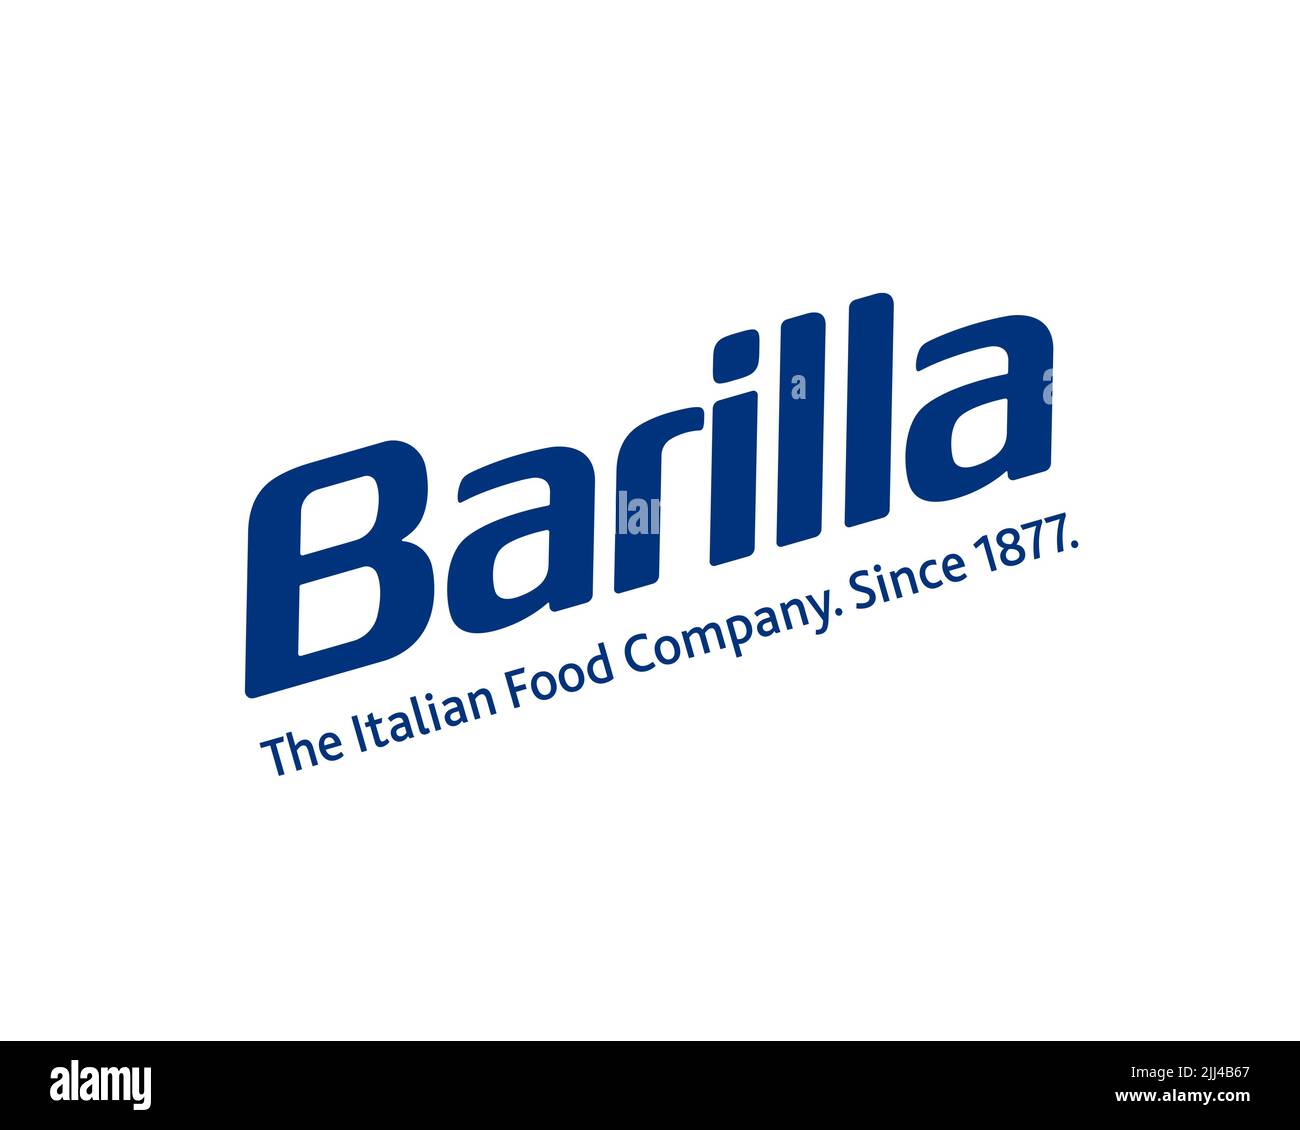 Barilla company, rotated logo, white background Stock Photo - Alamy